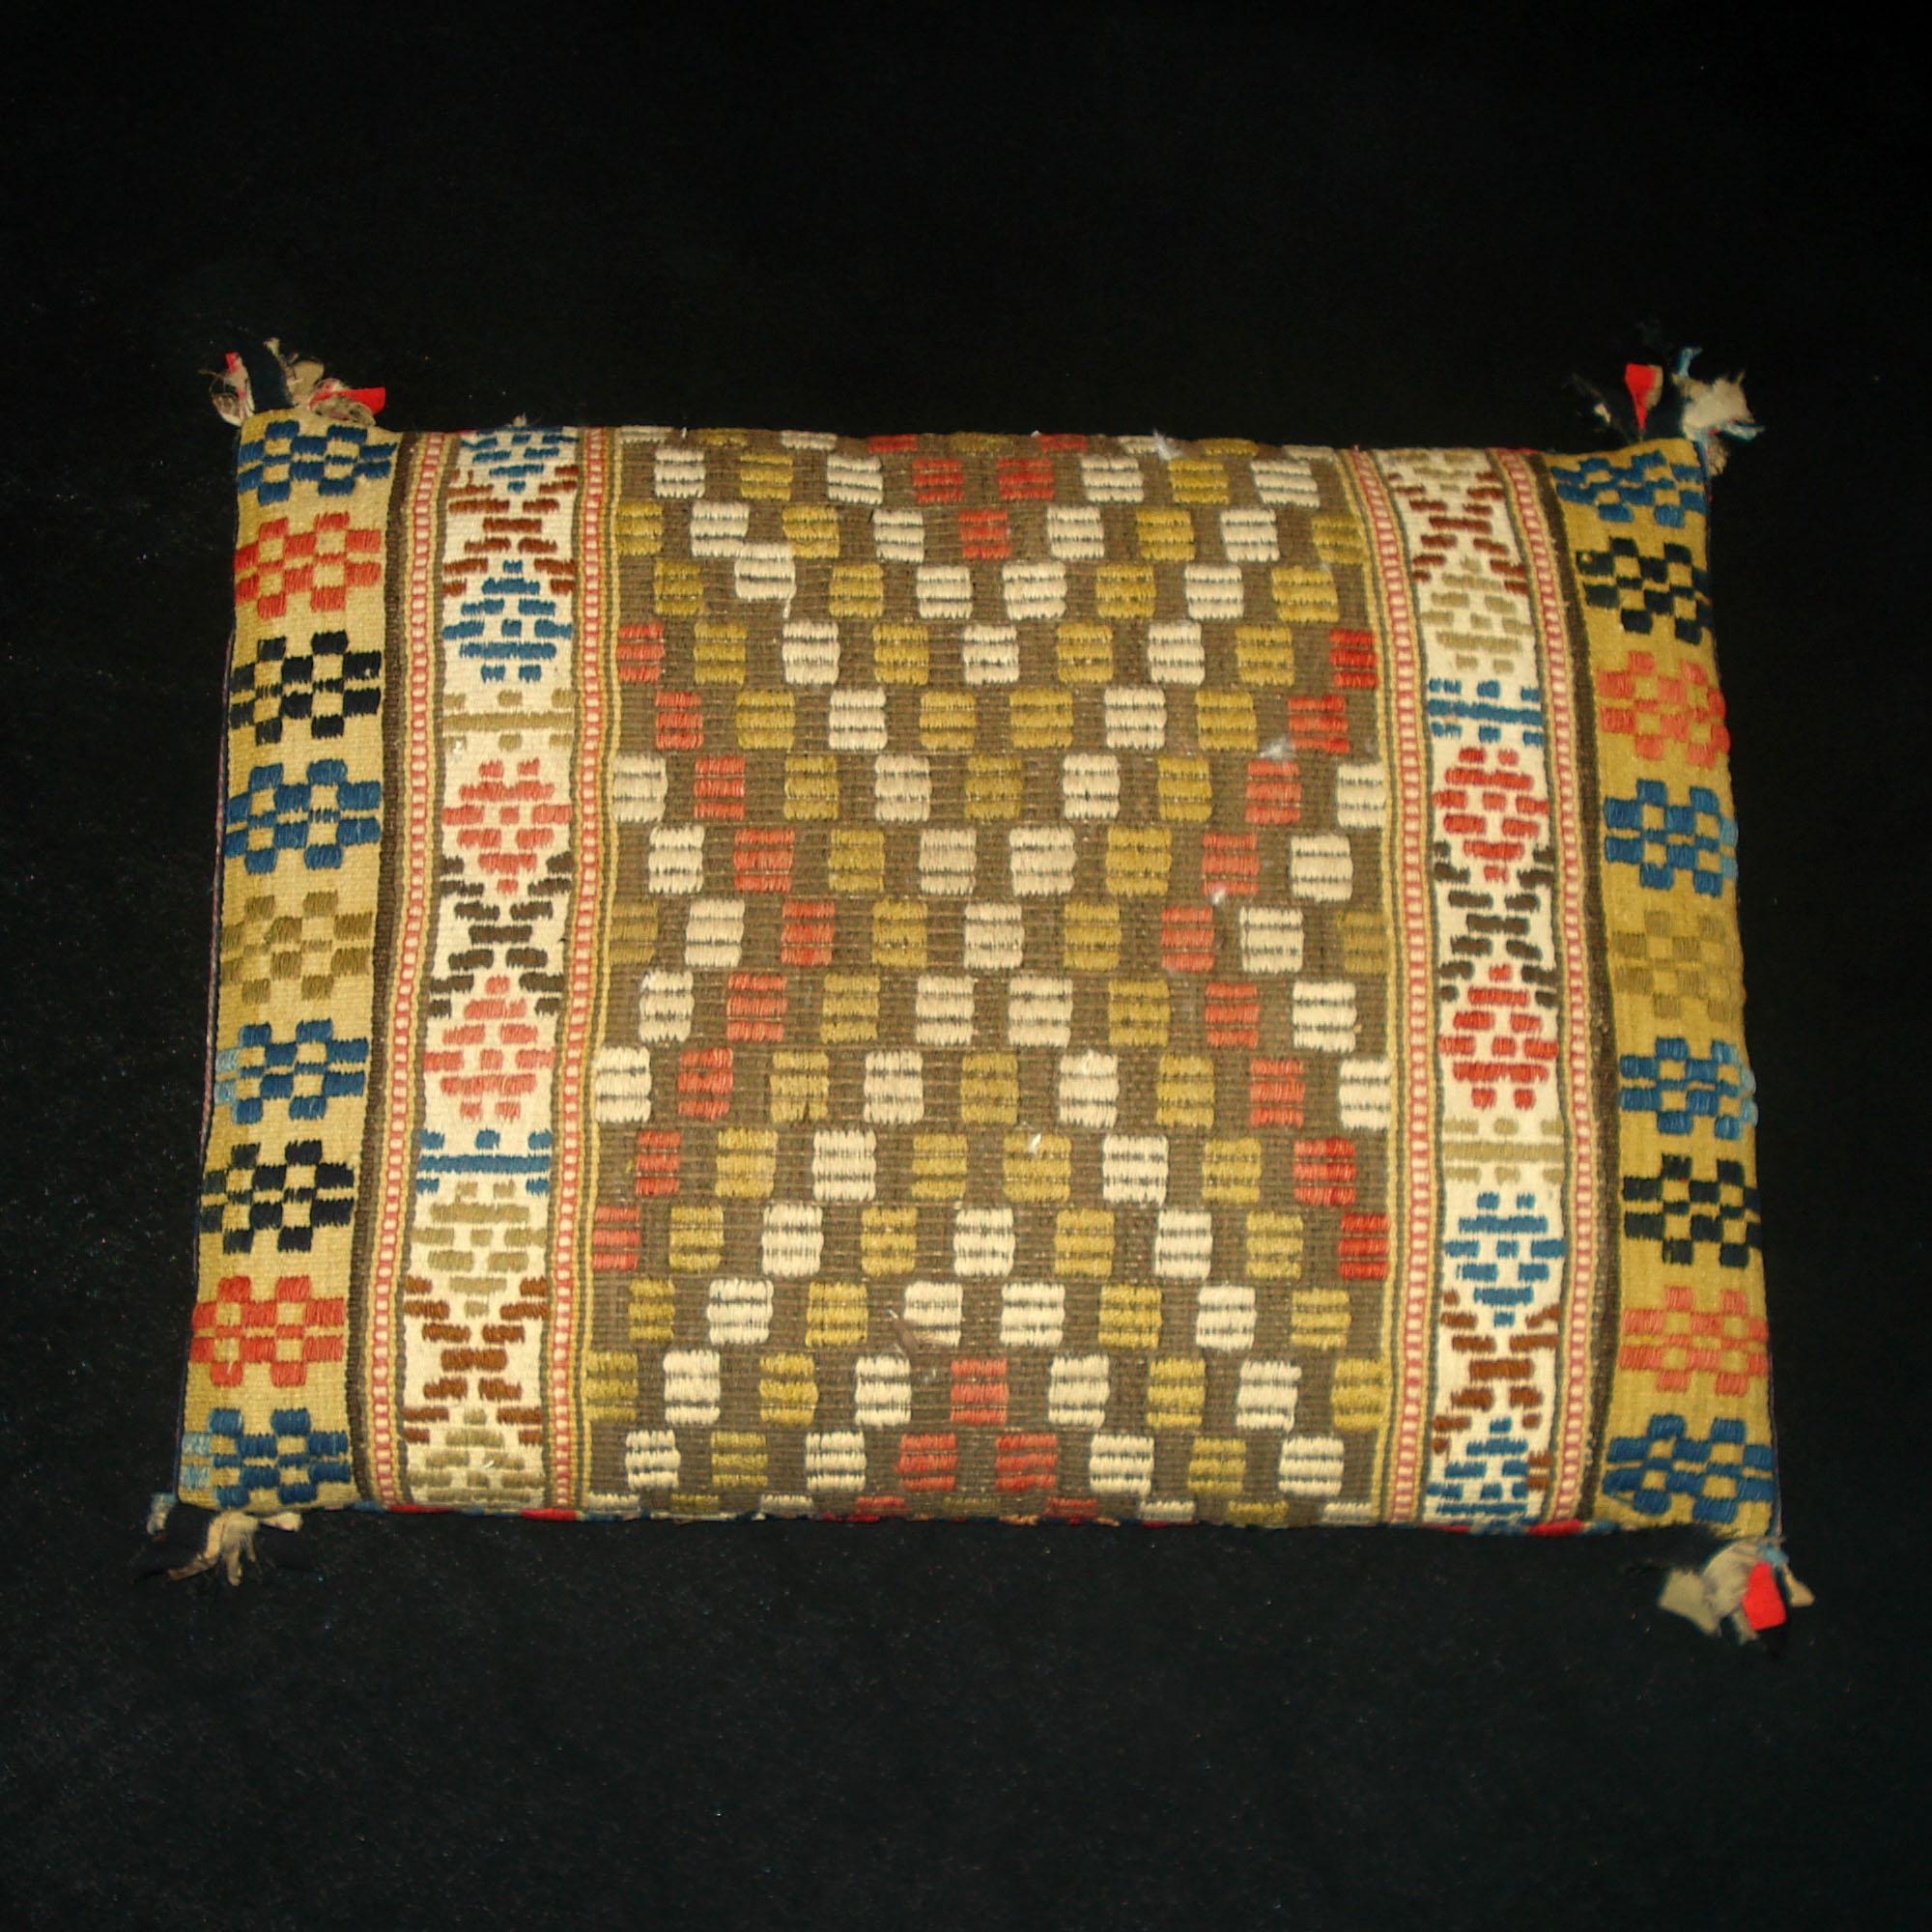 Wool Rollakan Pillow, Hand-Woven Pillow, Sweden, 19th Century For Sale